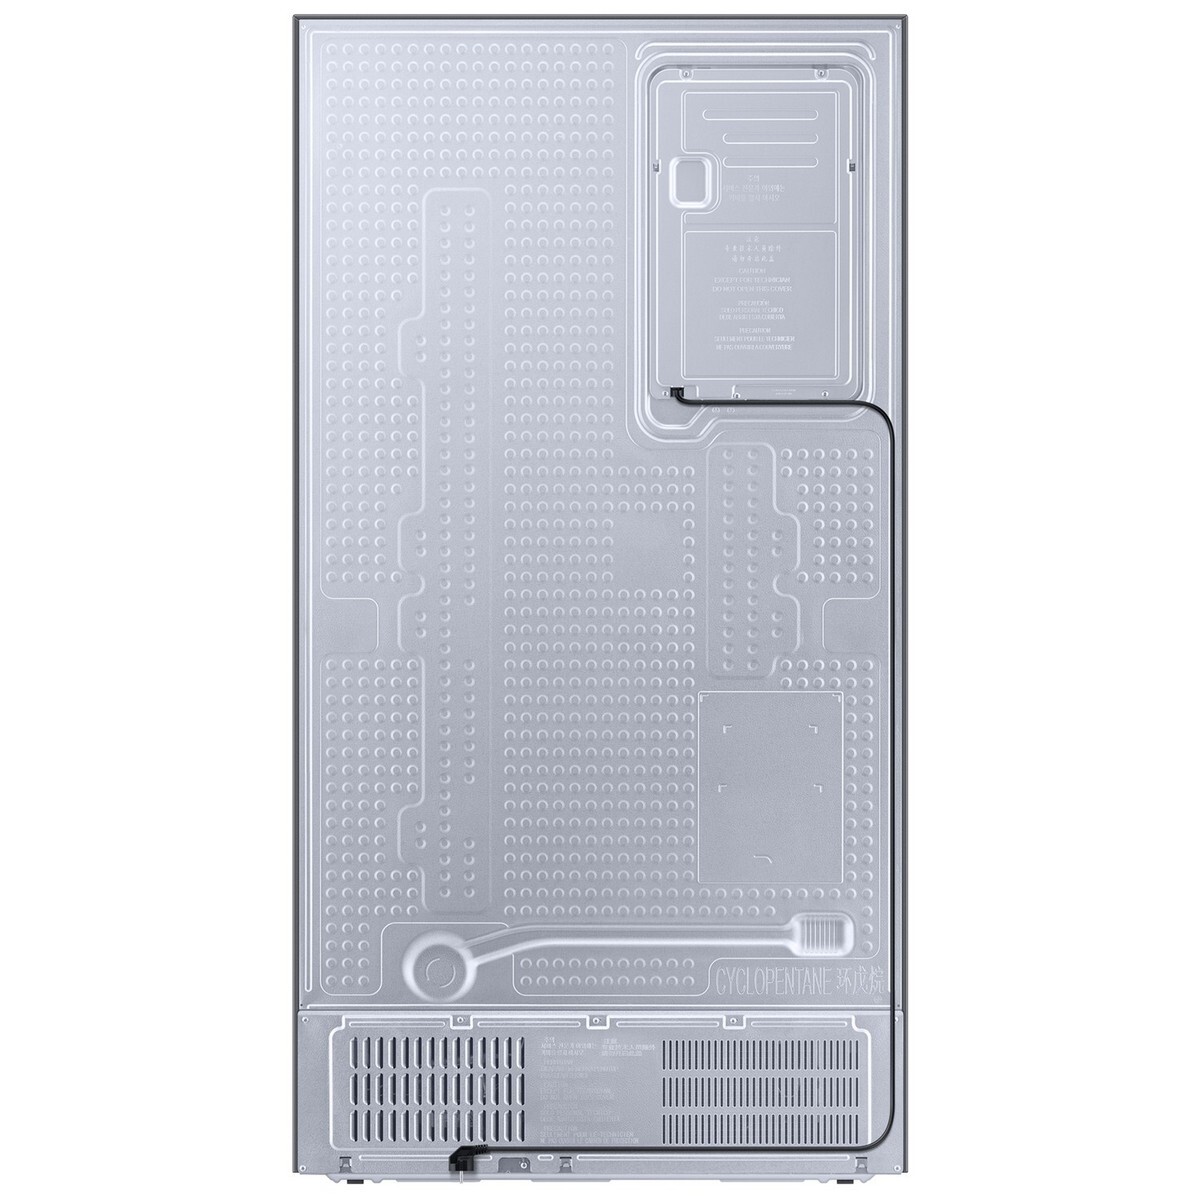 Samsung Bespoke Side By Side Refrigerator RS76CB811312 653L